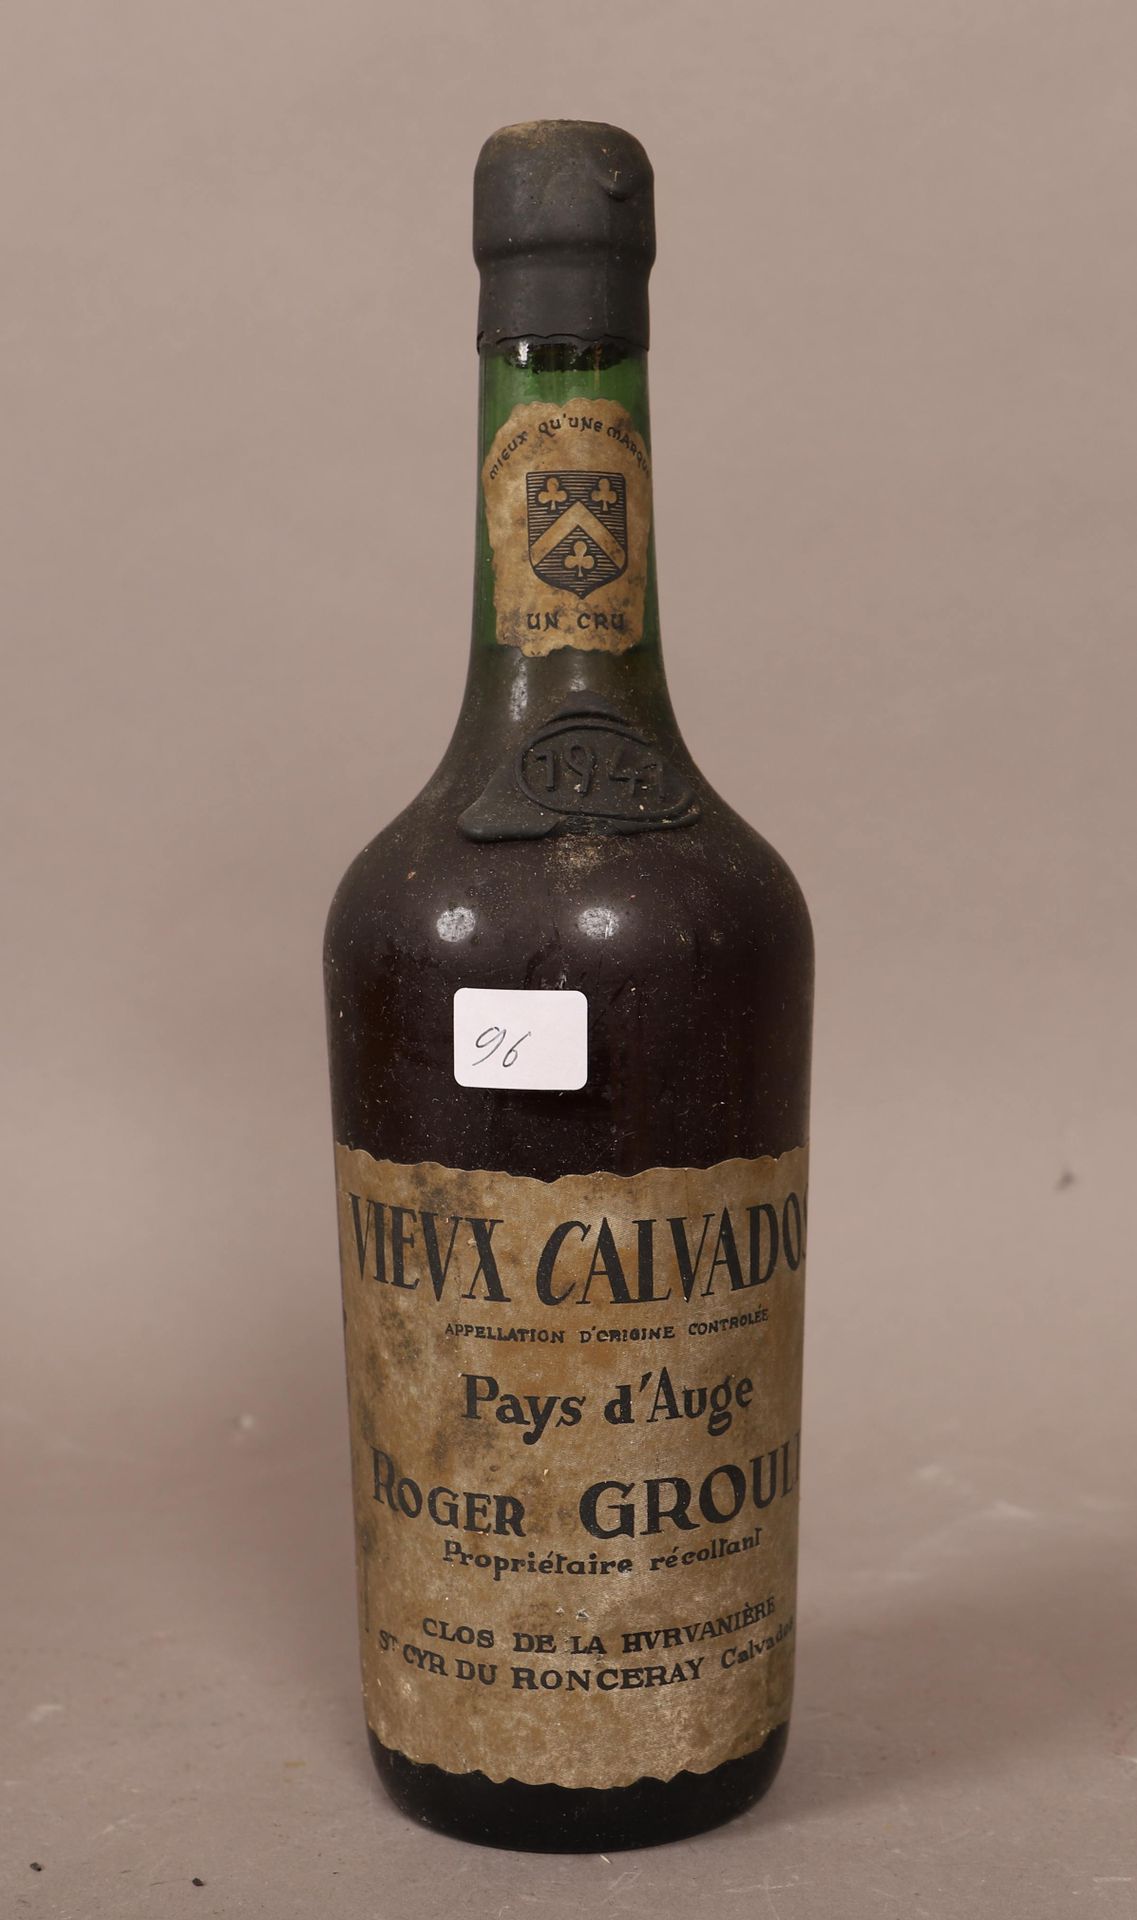 Null Calvados (x1)

Pays d'Auge (Land der Augen)

1941

0,70L